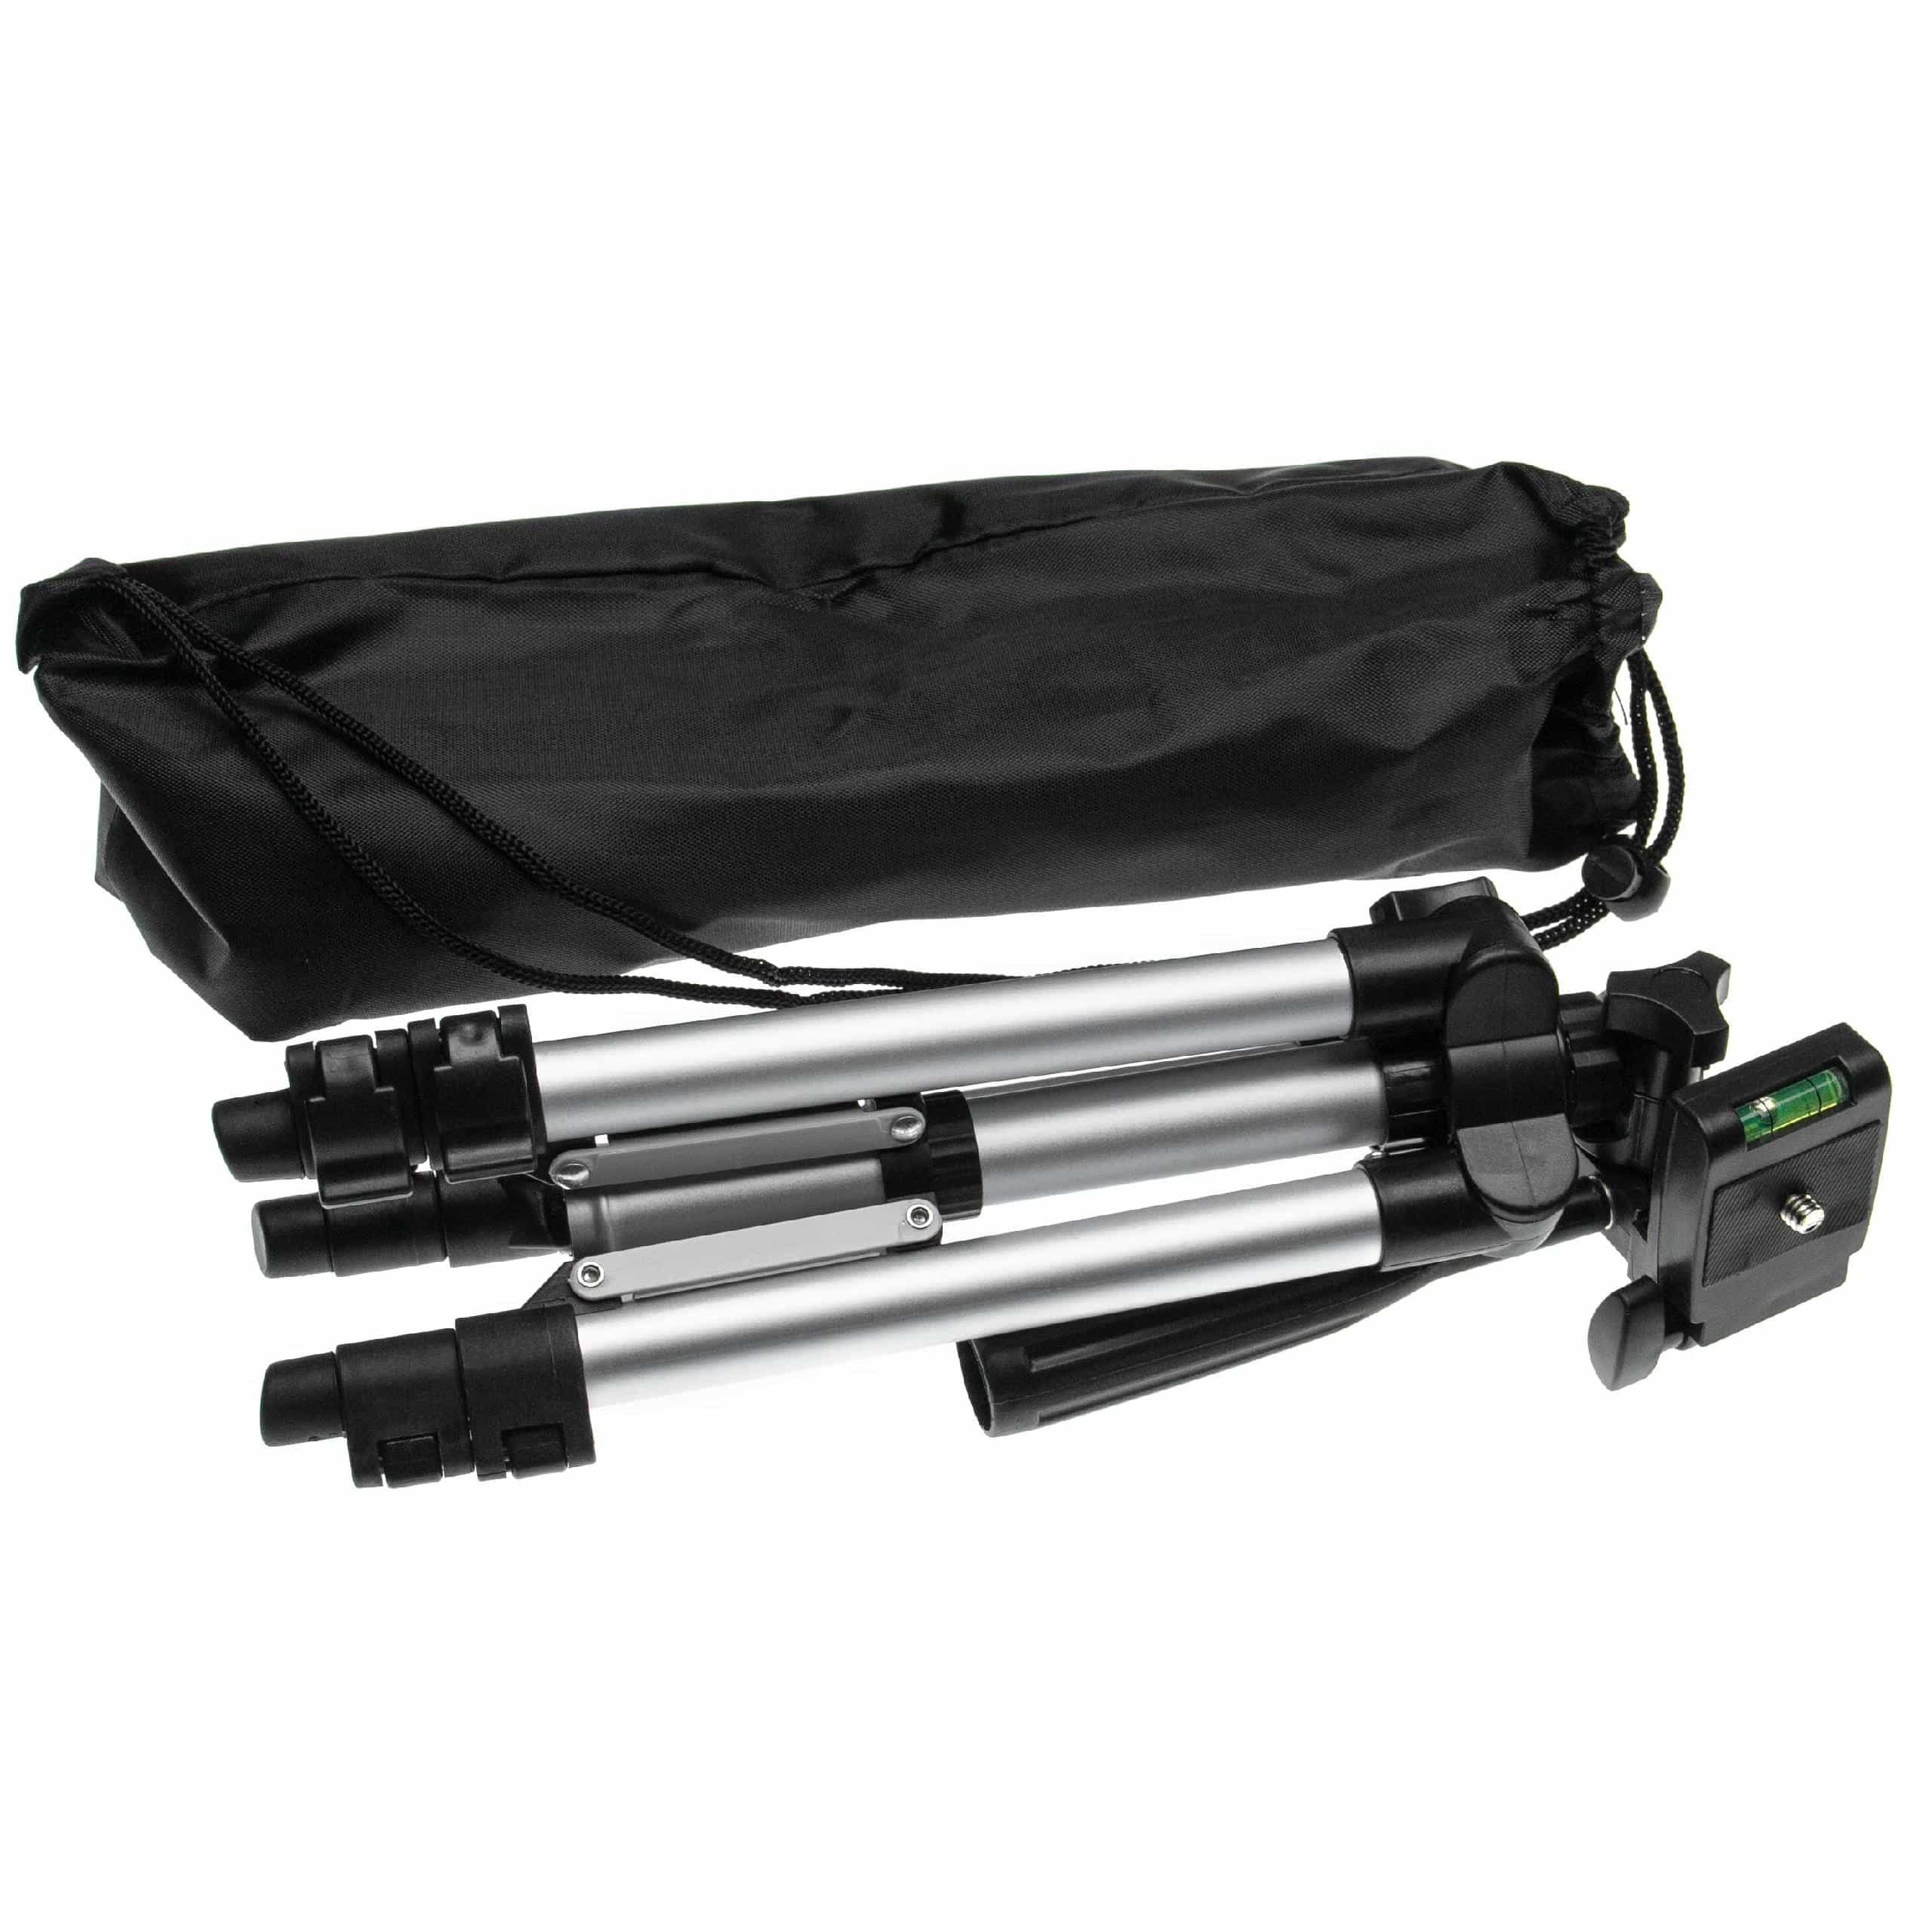 Trípode fotográfico para cámaras - Incl. bolsa de almacenamiento, 30 - 65 cm, máx. 2 kg